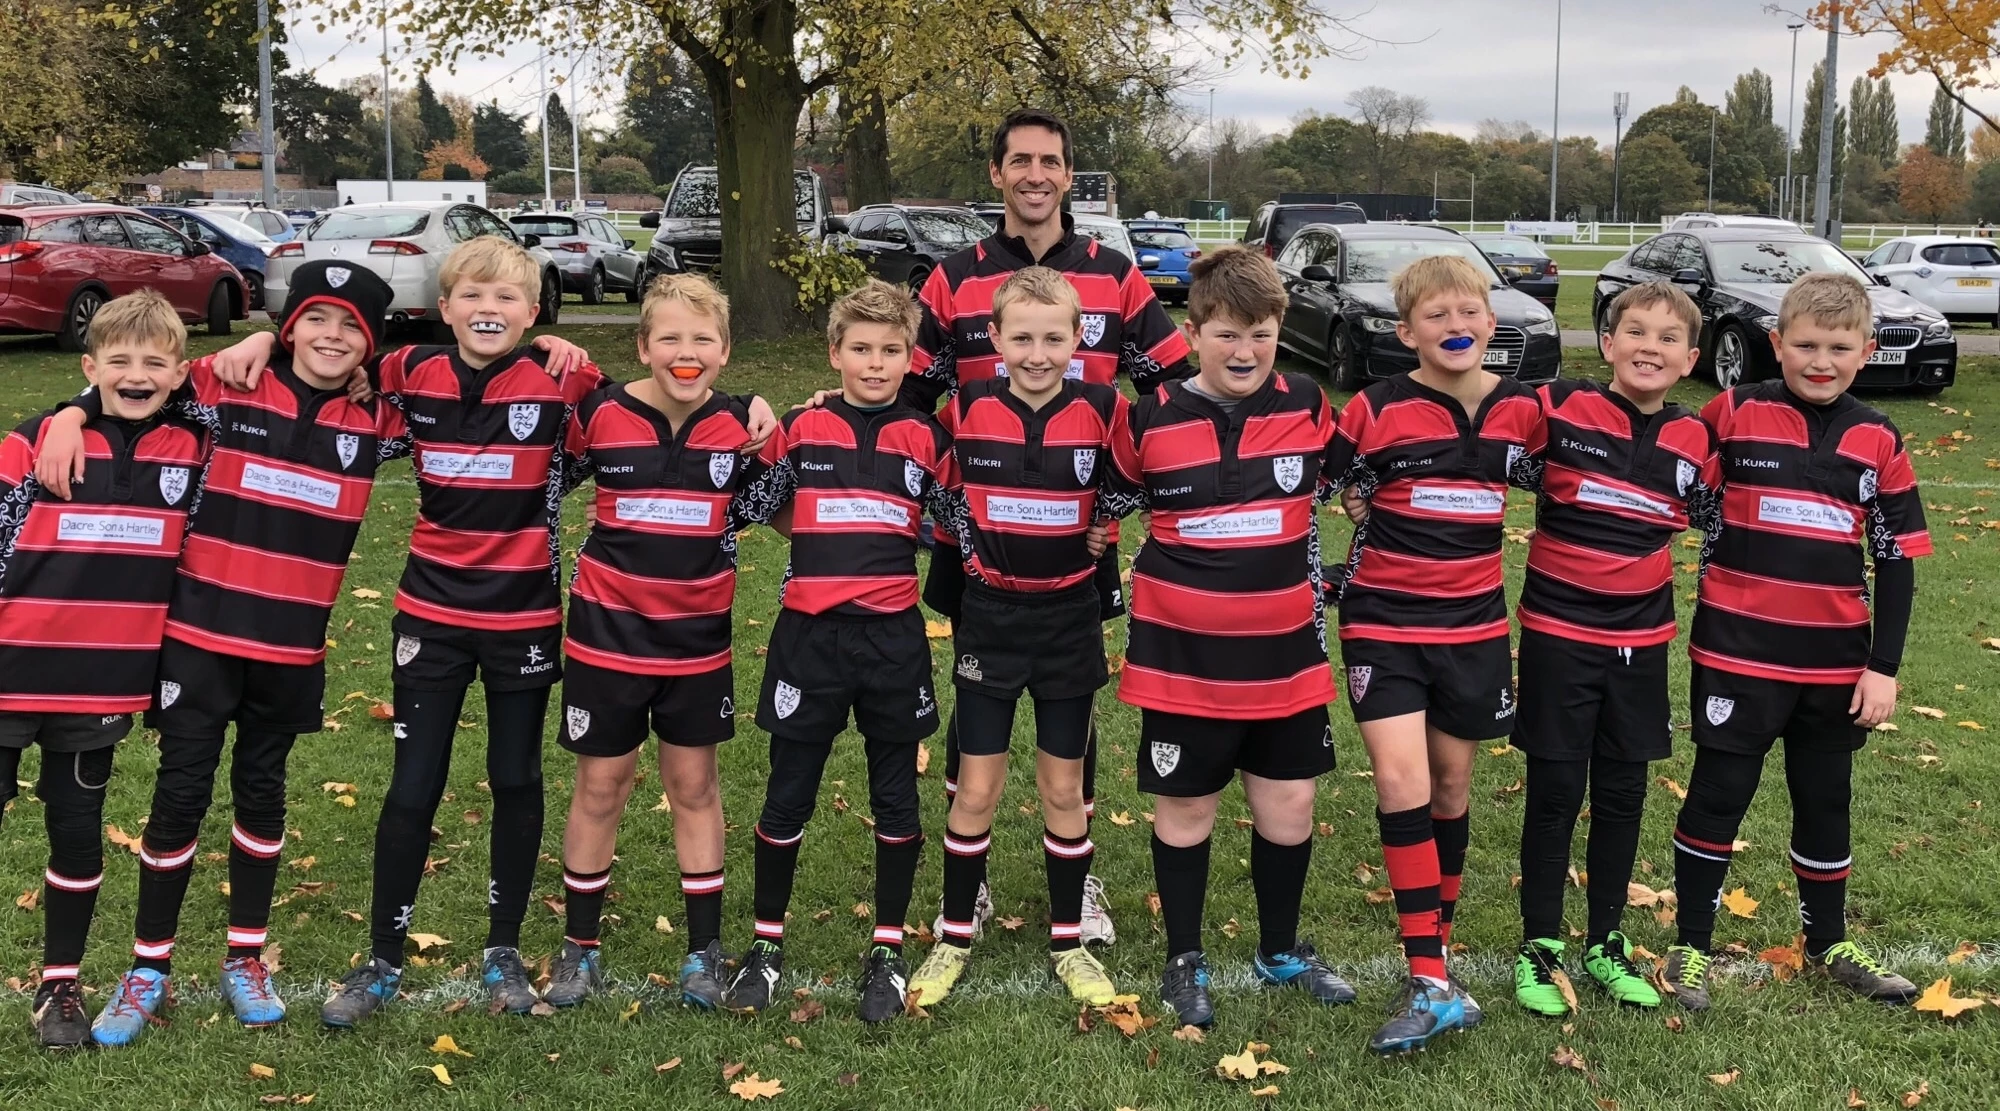 Ilkley Rugby Club coach Jon Hughes and the Under 11 team